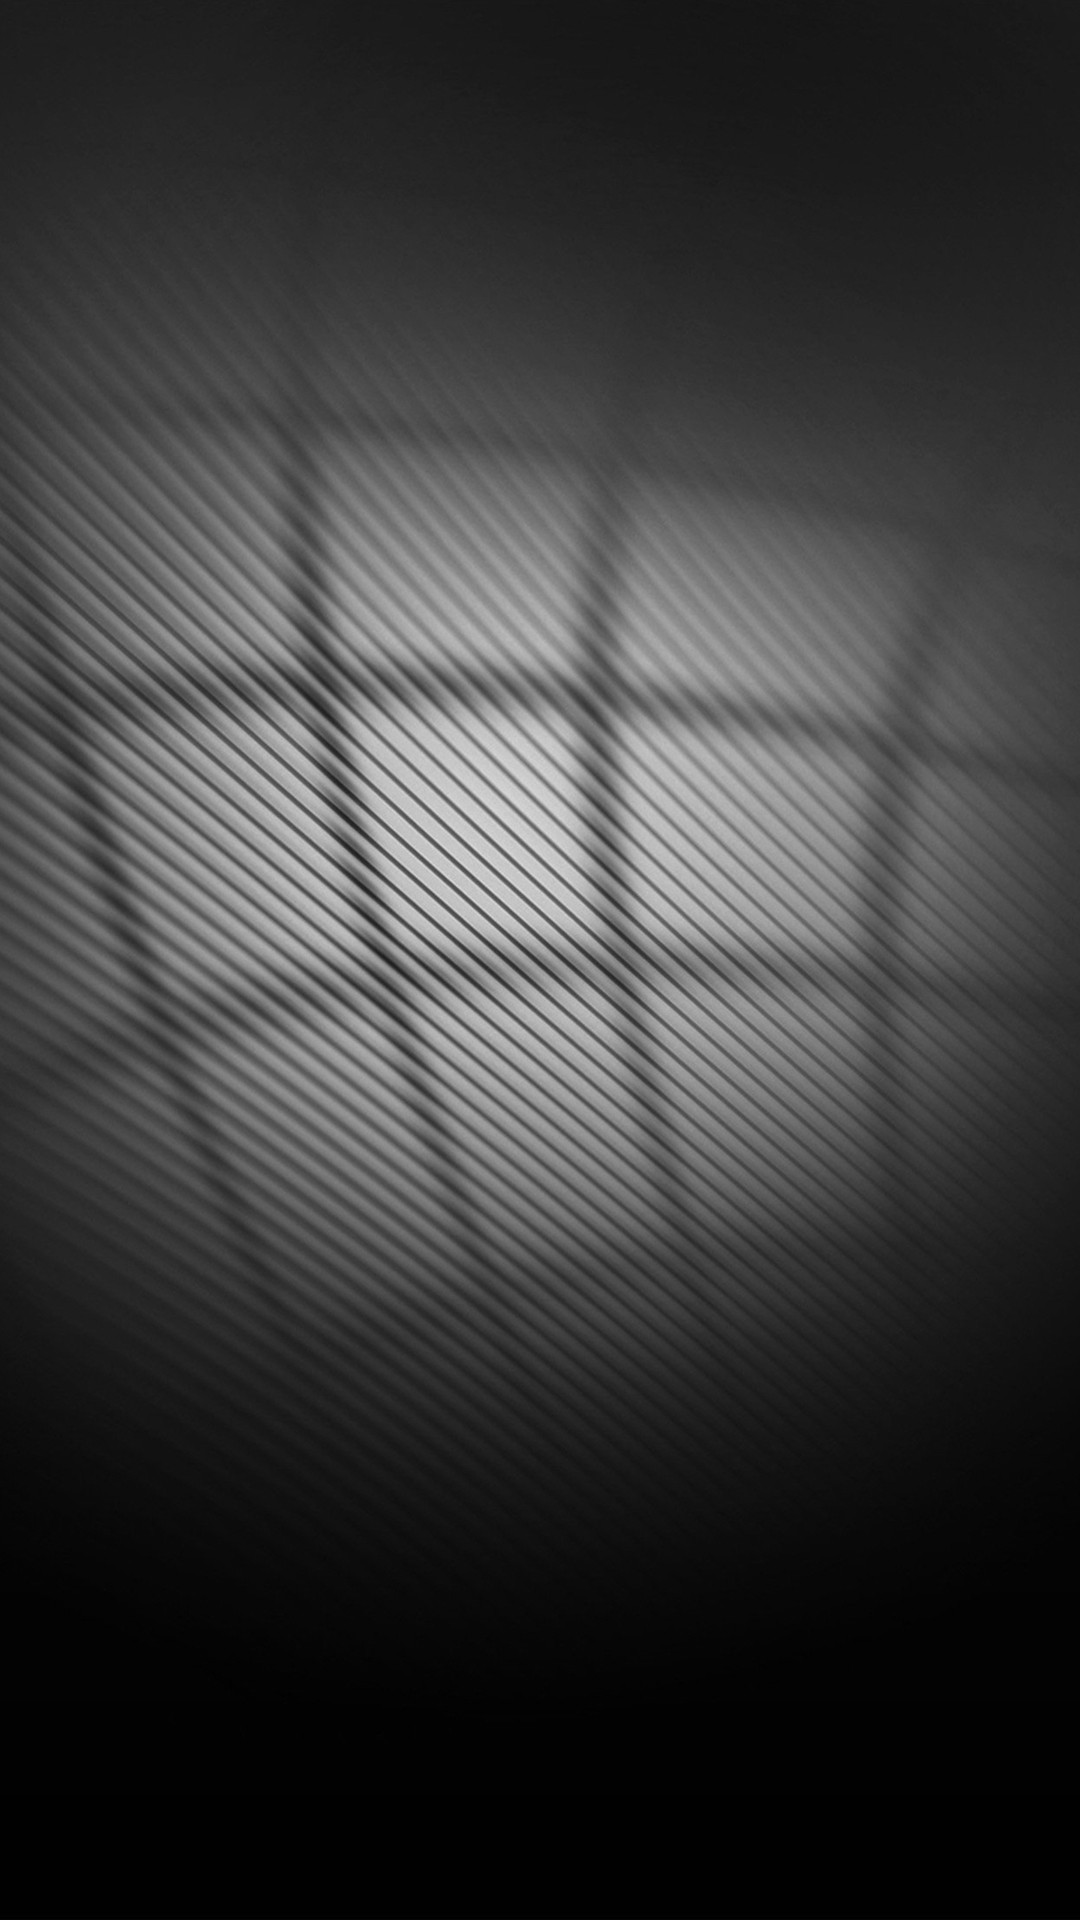 1080x1920 Huawei Dark Bw Soft Blur Texture Abstract Pattern #iPhone #7 #wallpaper